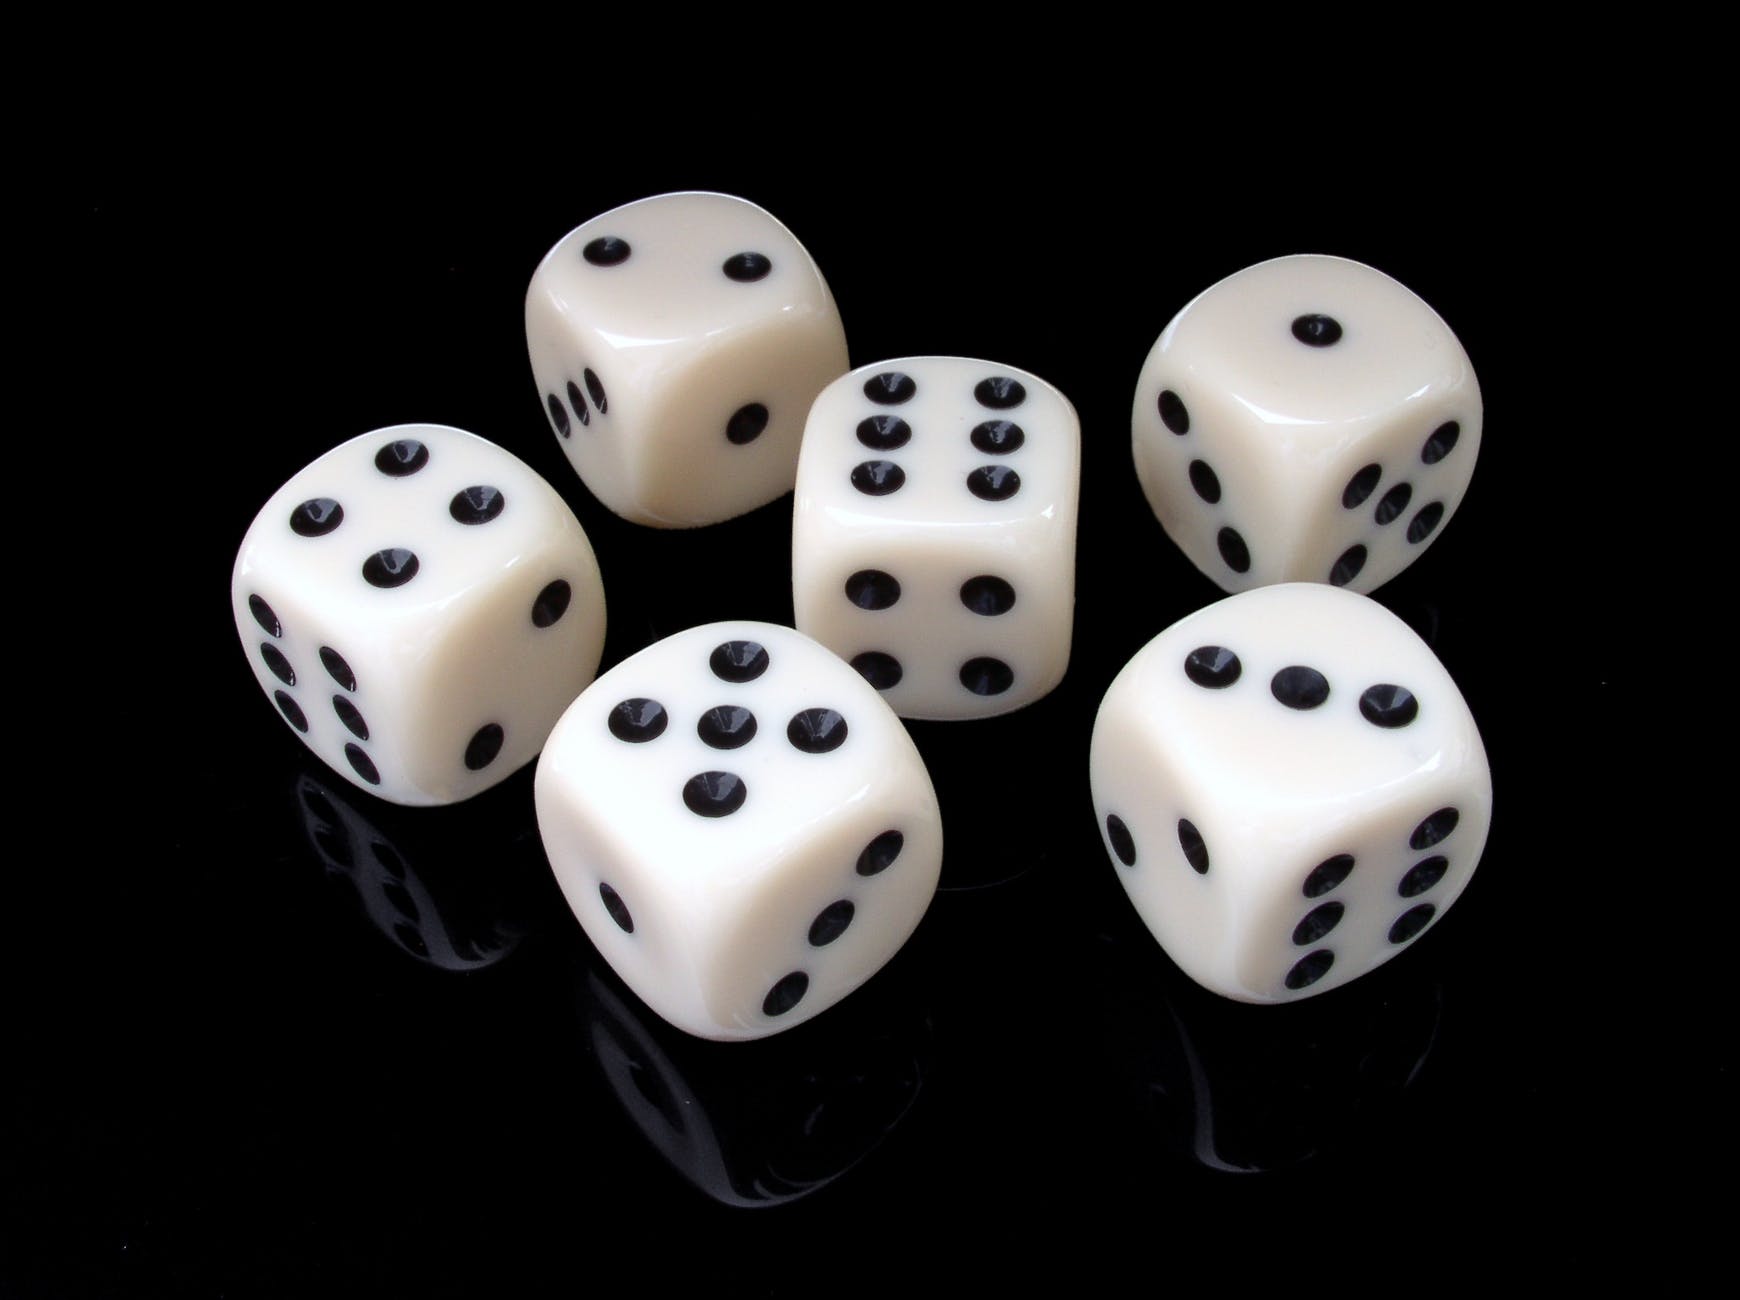 cube-six-gambling-play-37534.jpeg